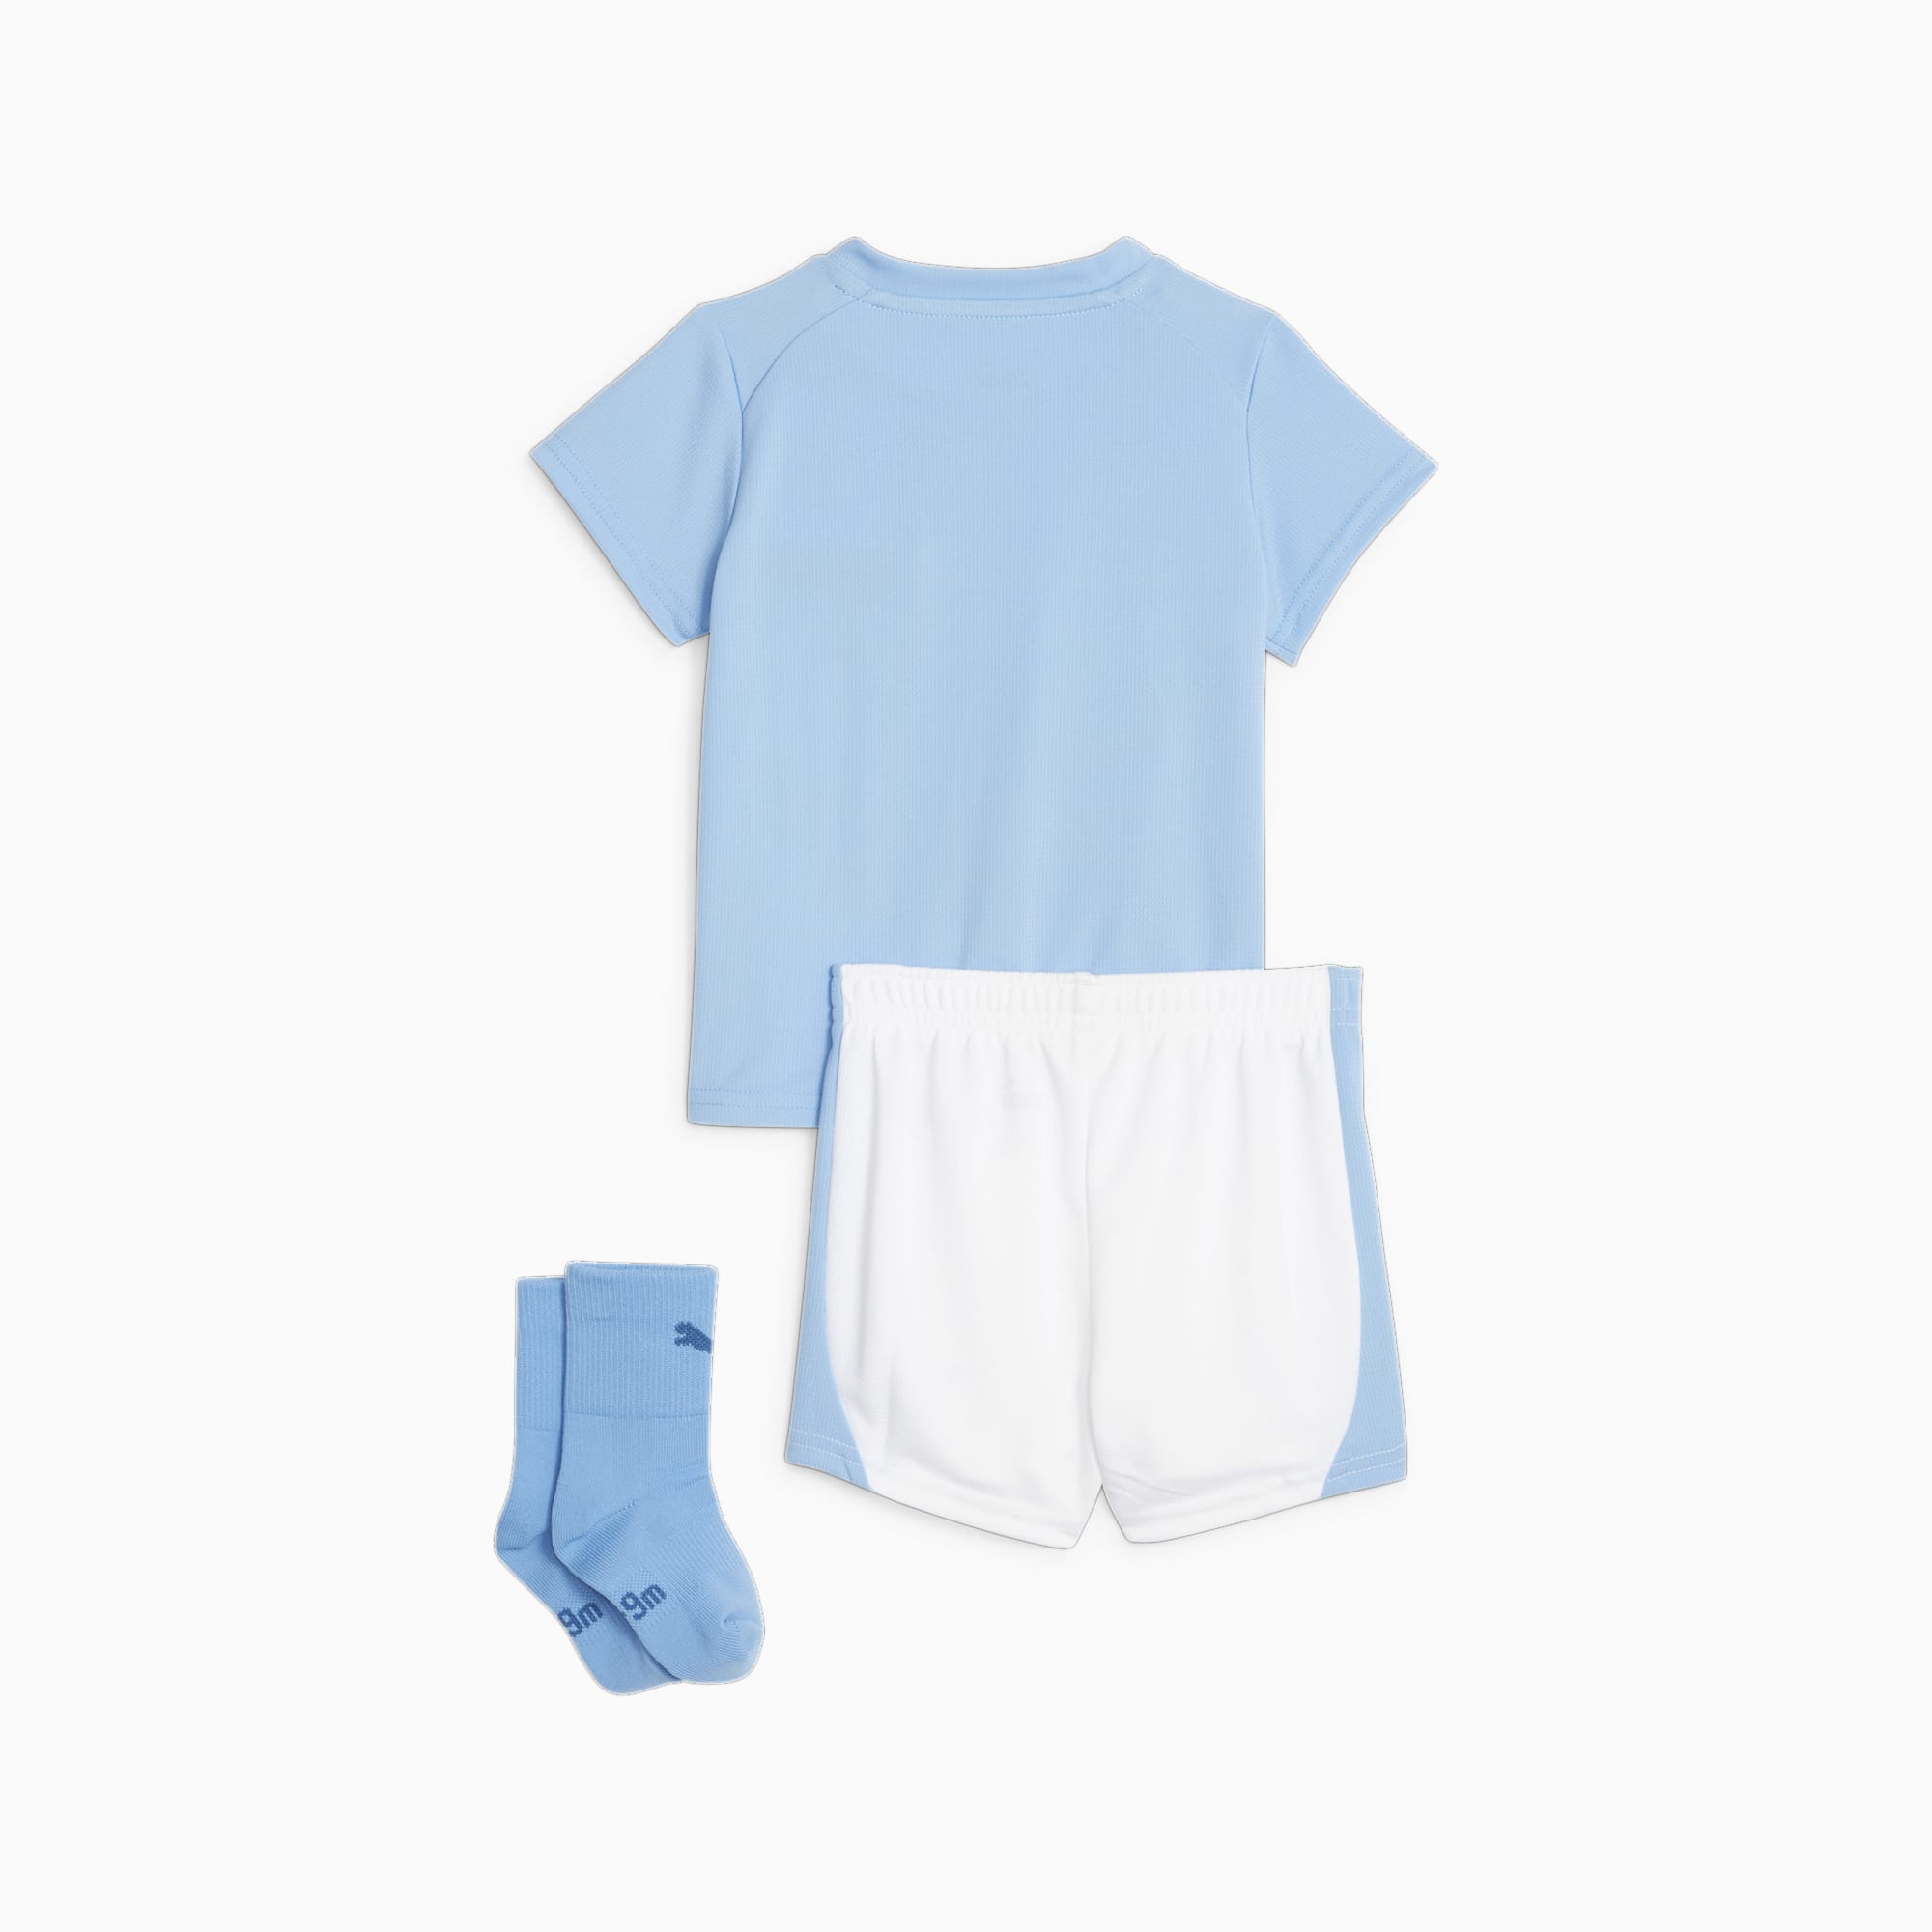 PUMA Manchester City F.C. Home Baby Kit, Light Blue/White, Size 68, Clothing